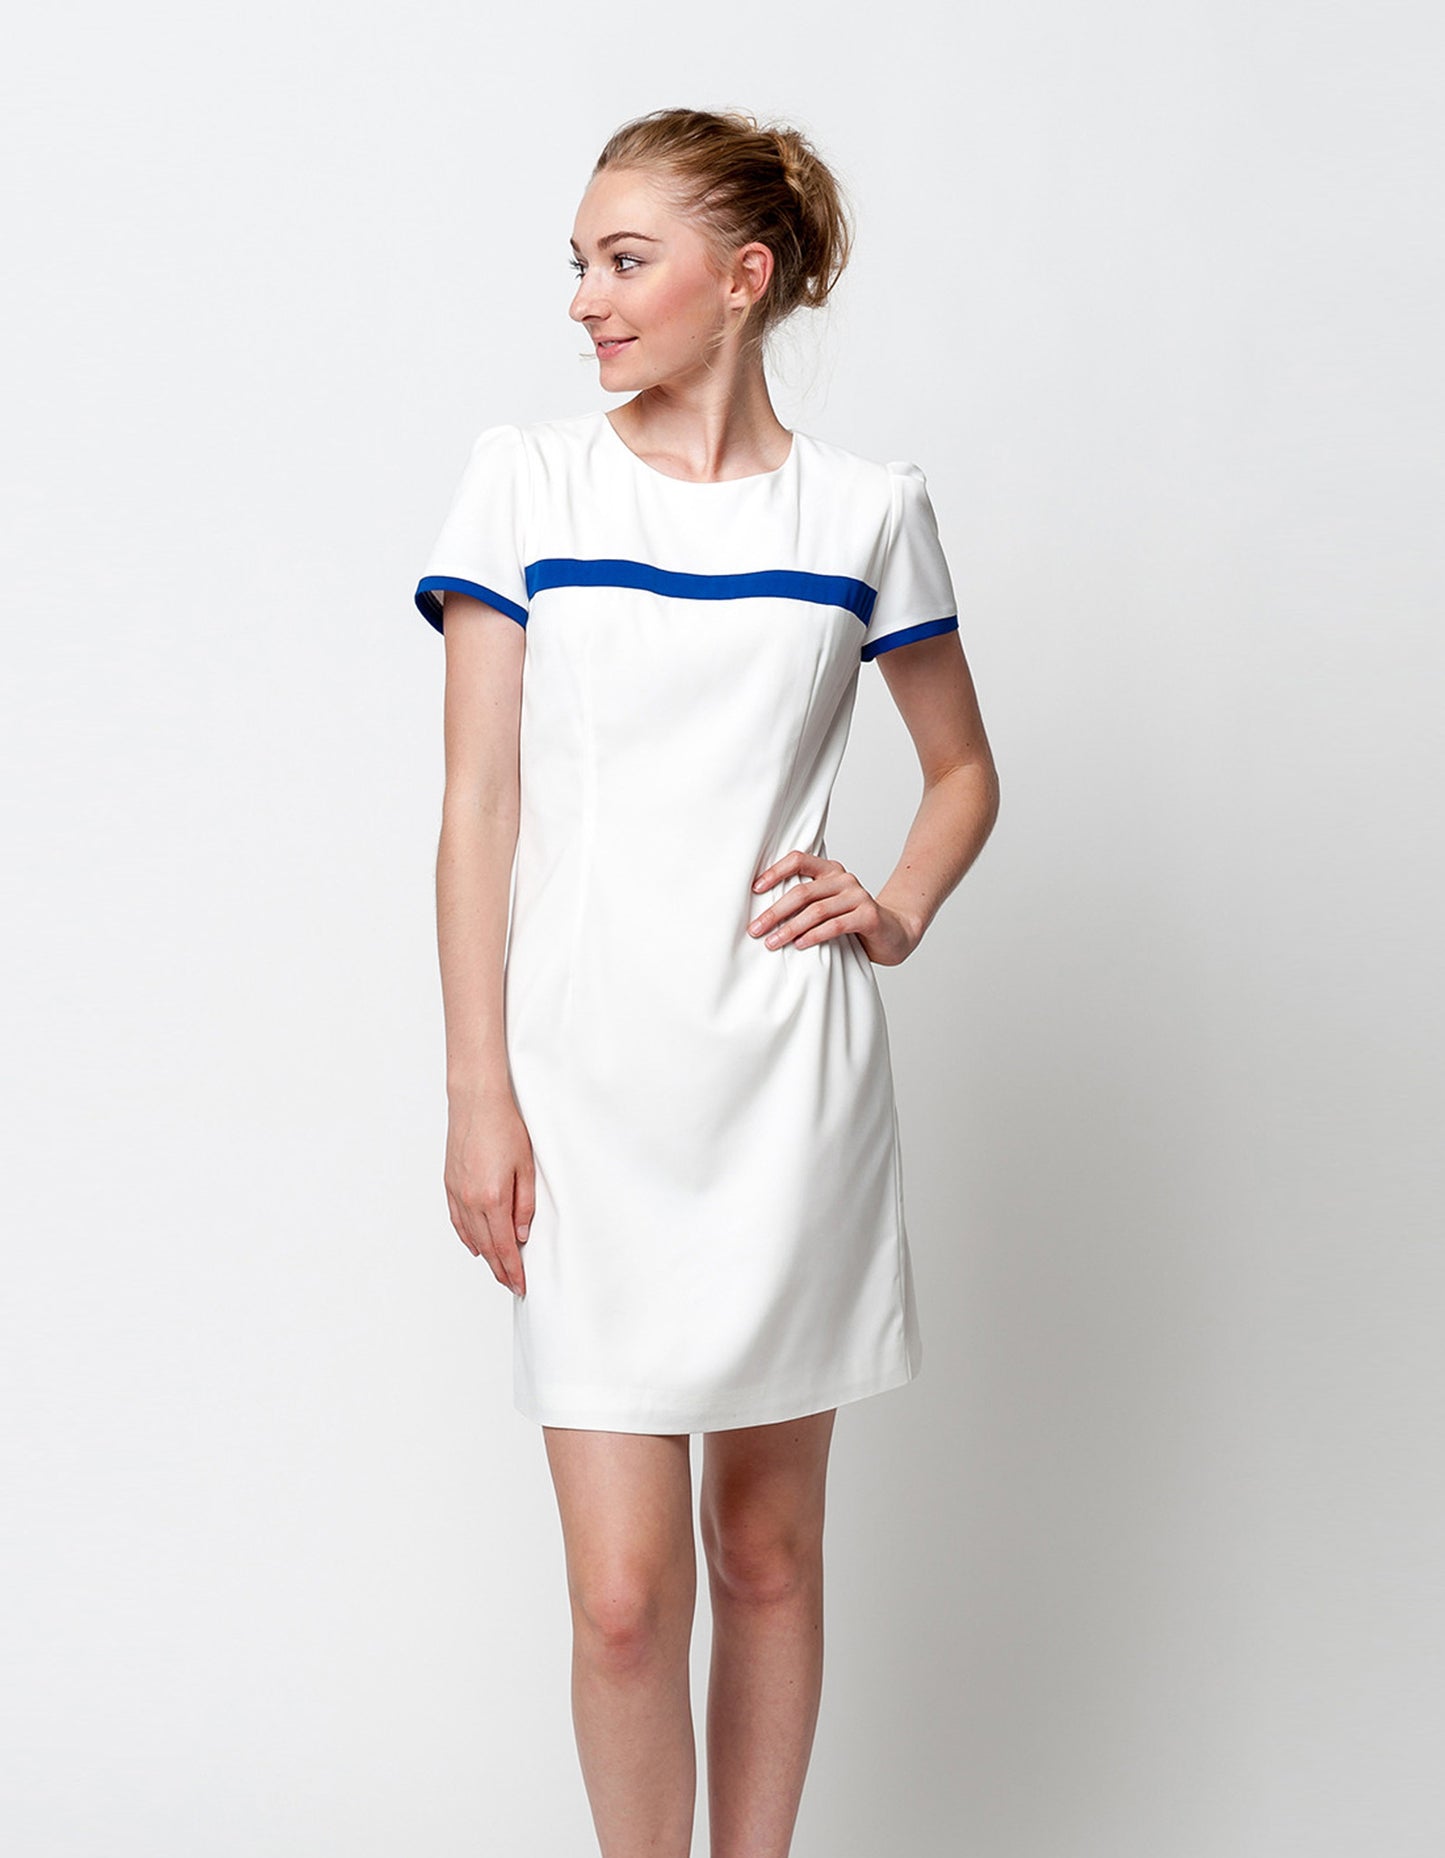 Blue-Lined White Shift Dress